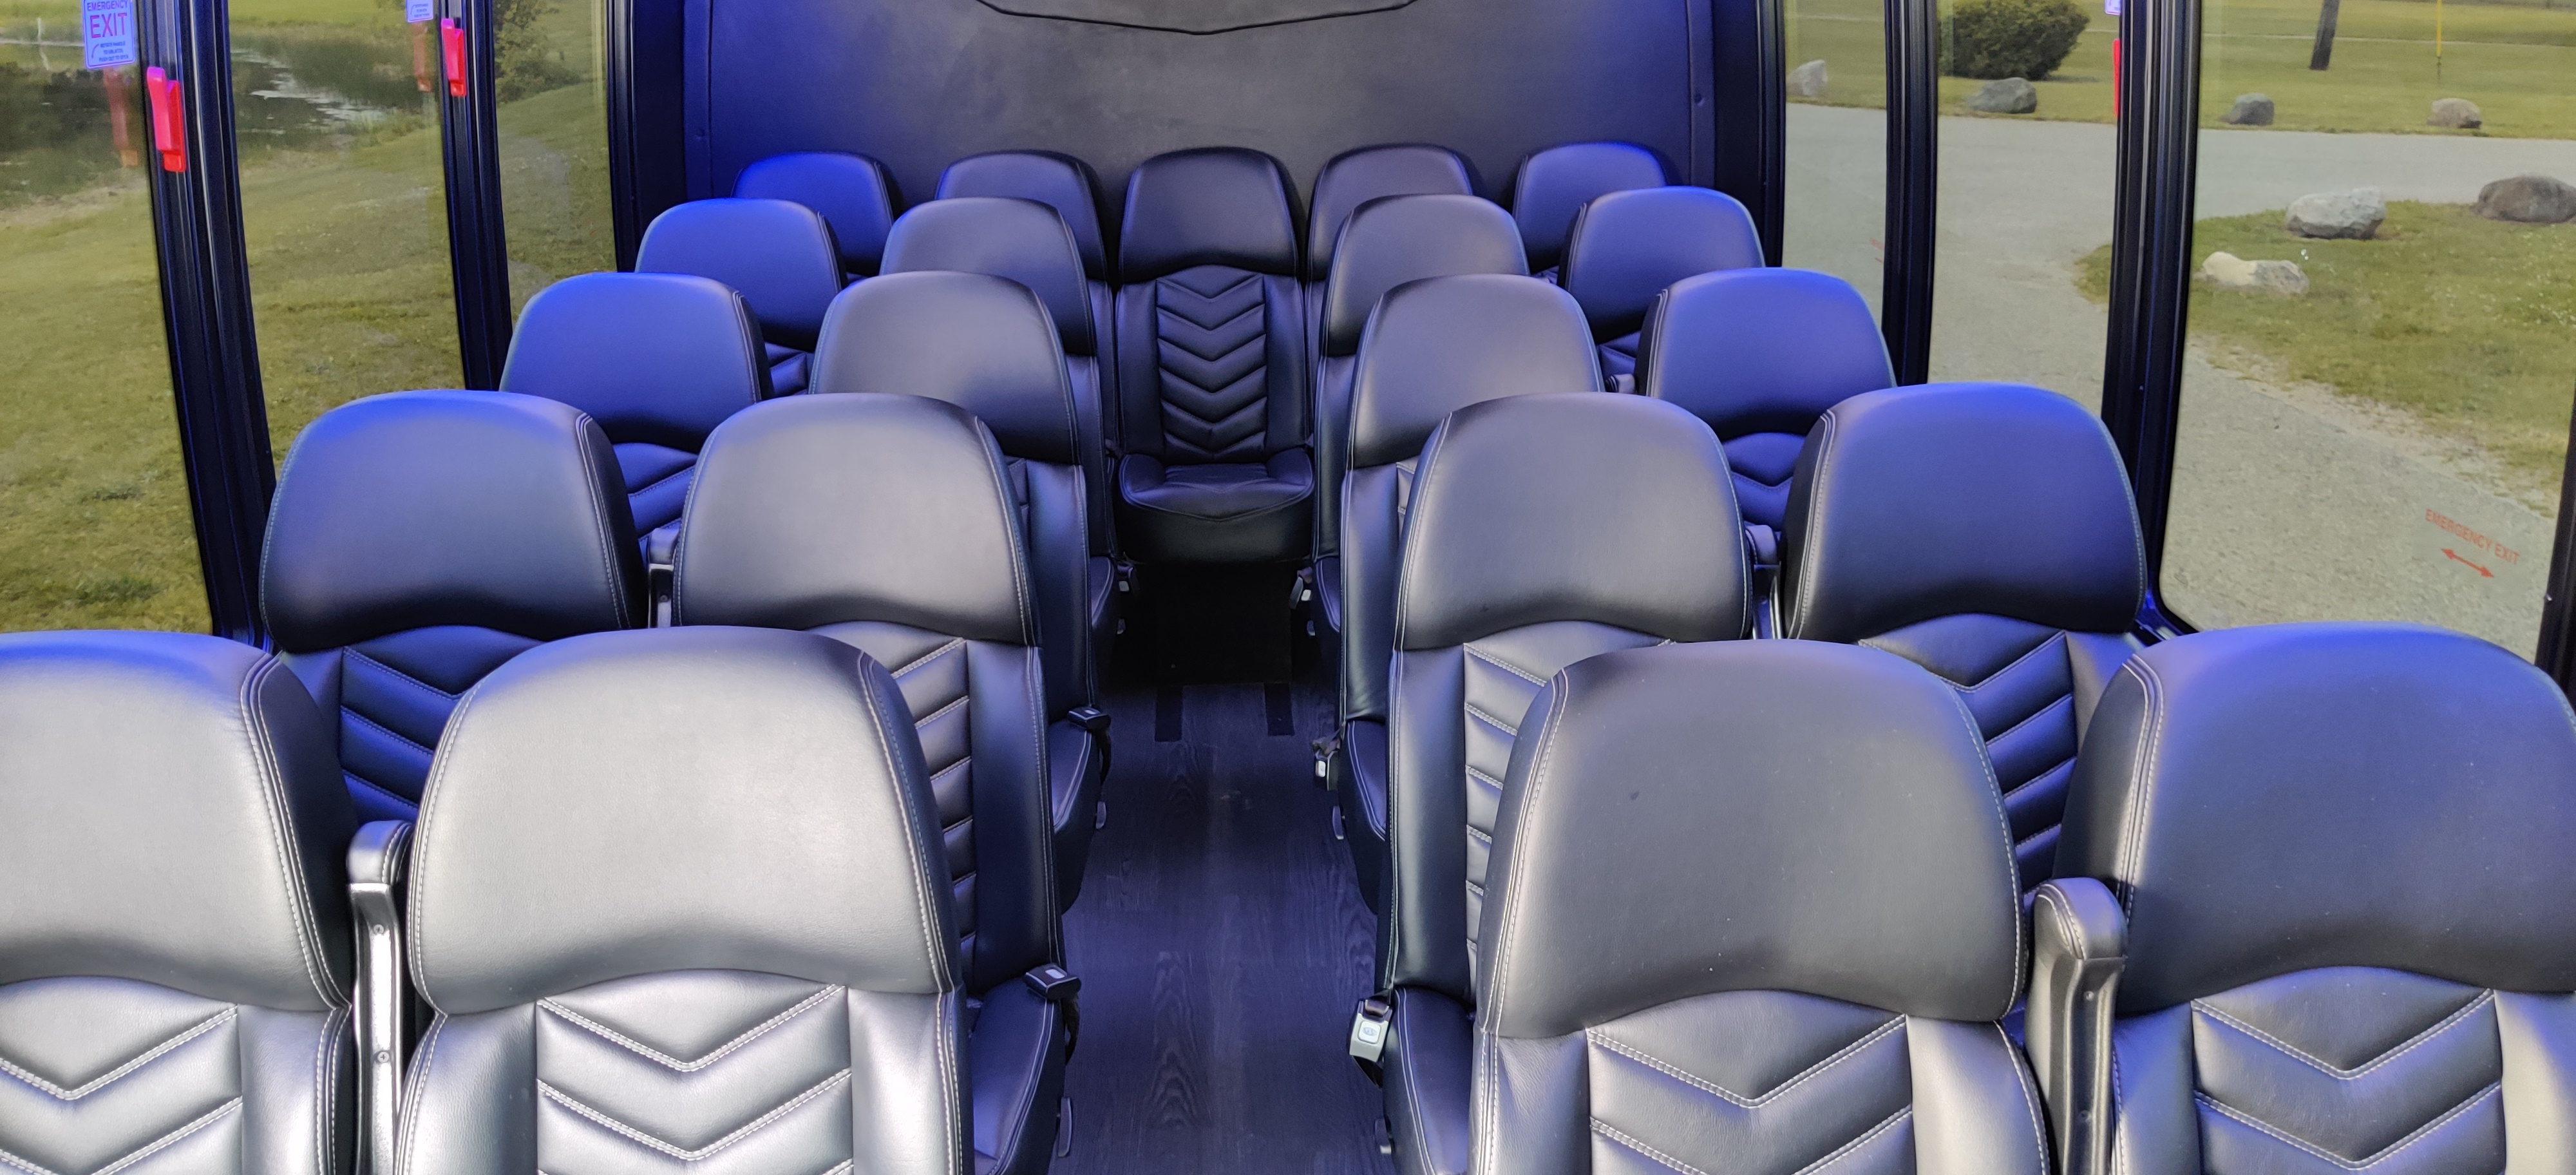 23-2 Passenger Executive Shuttle Bus Interior 1